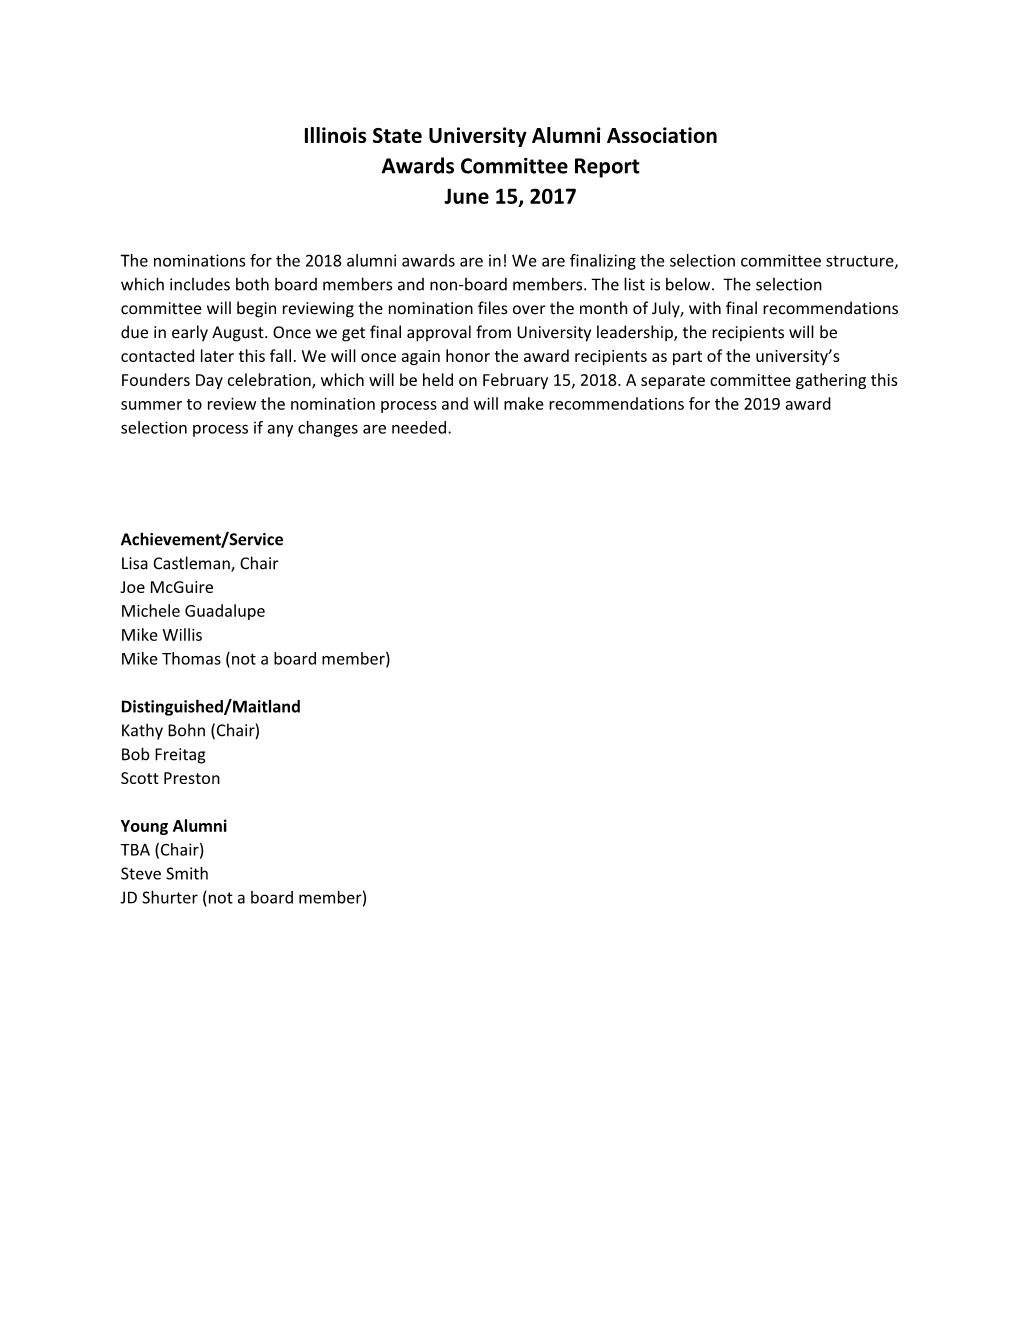 Illinois State University Alumni Association Awards Committee Report June 15, 2017